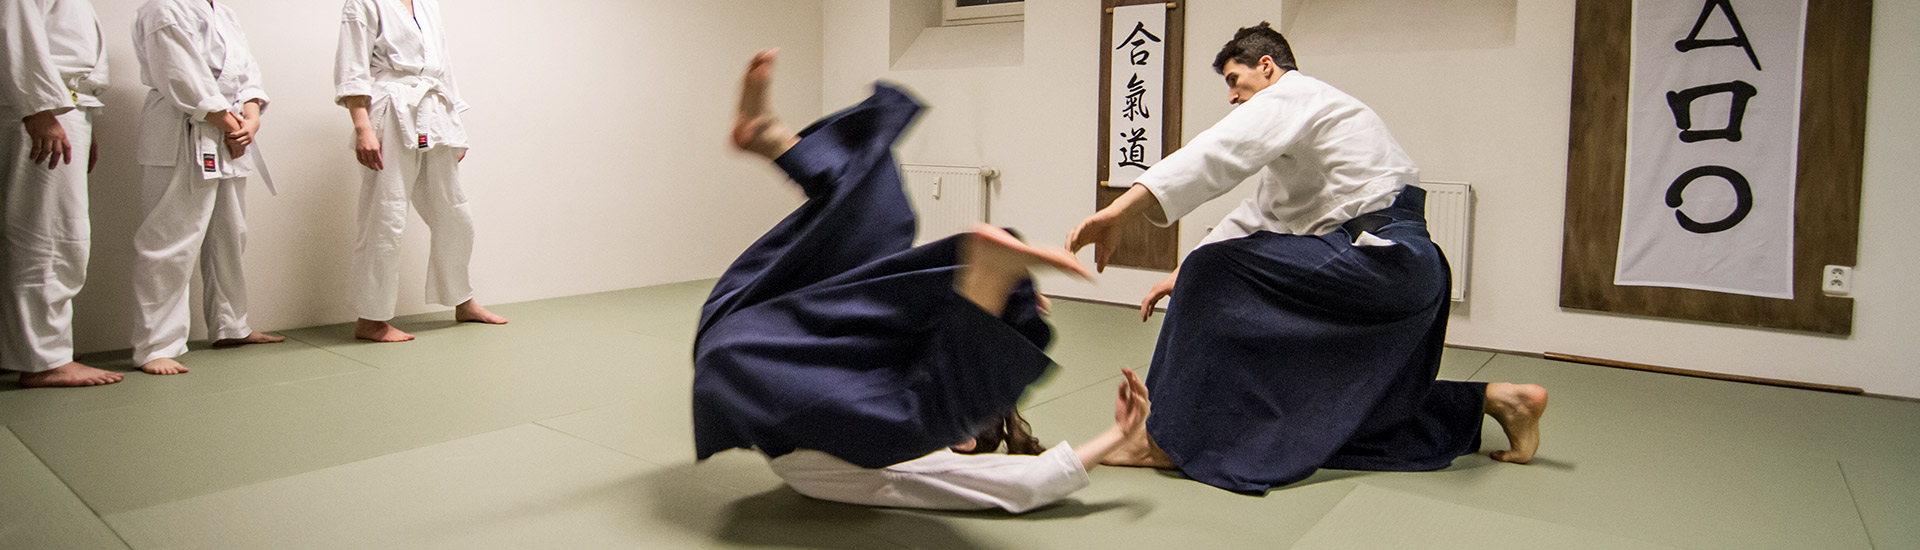 aikido02-header-aikido-kobukan